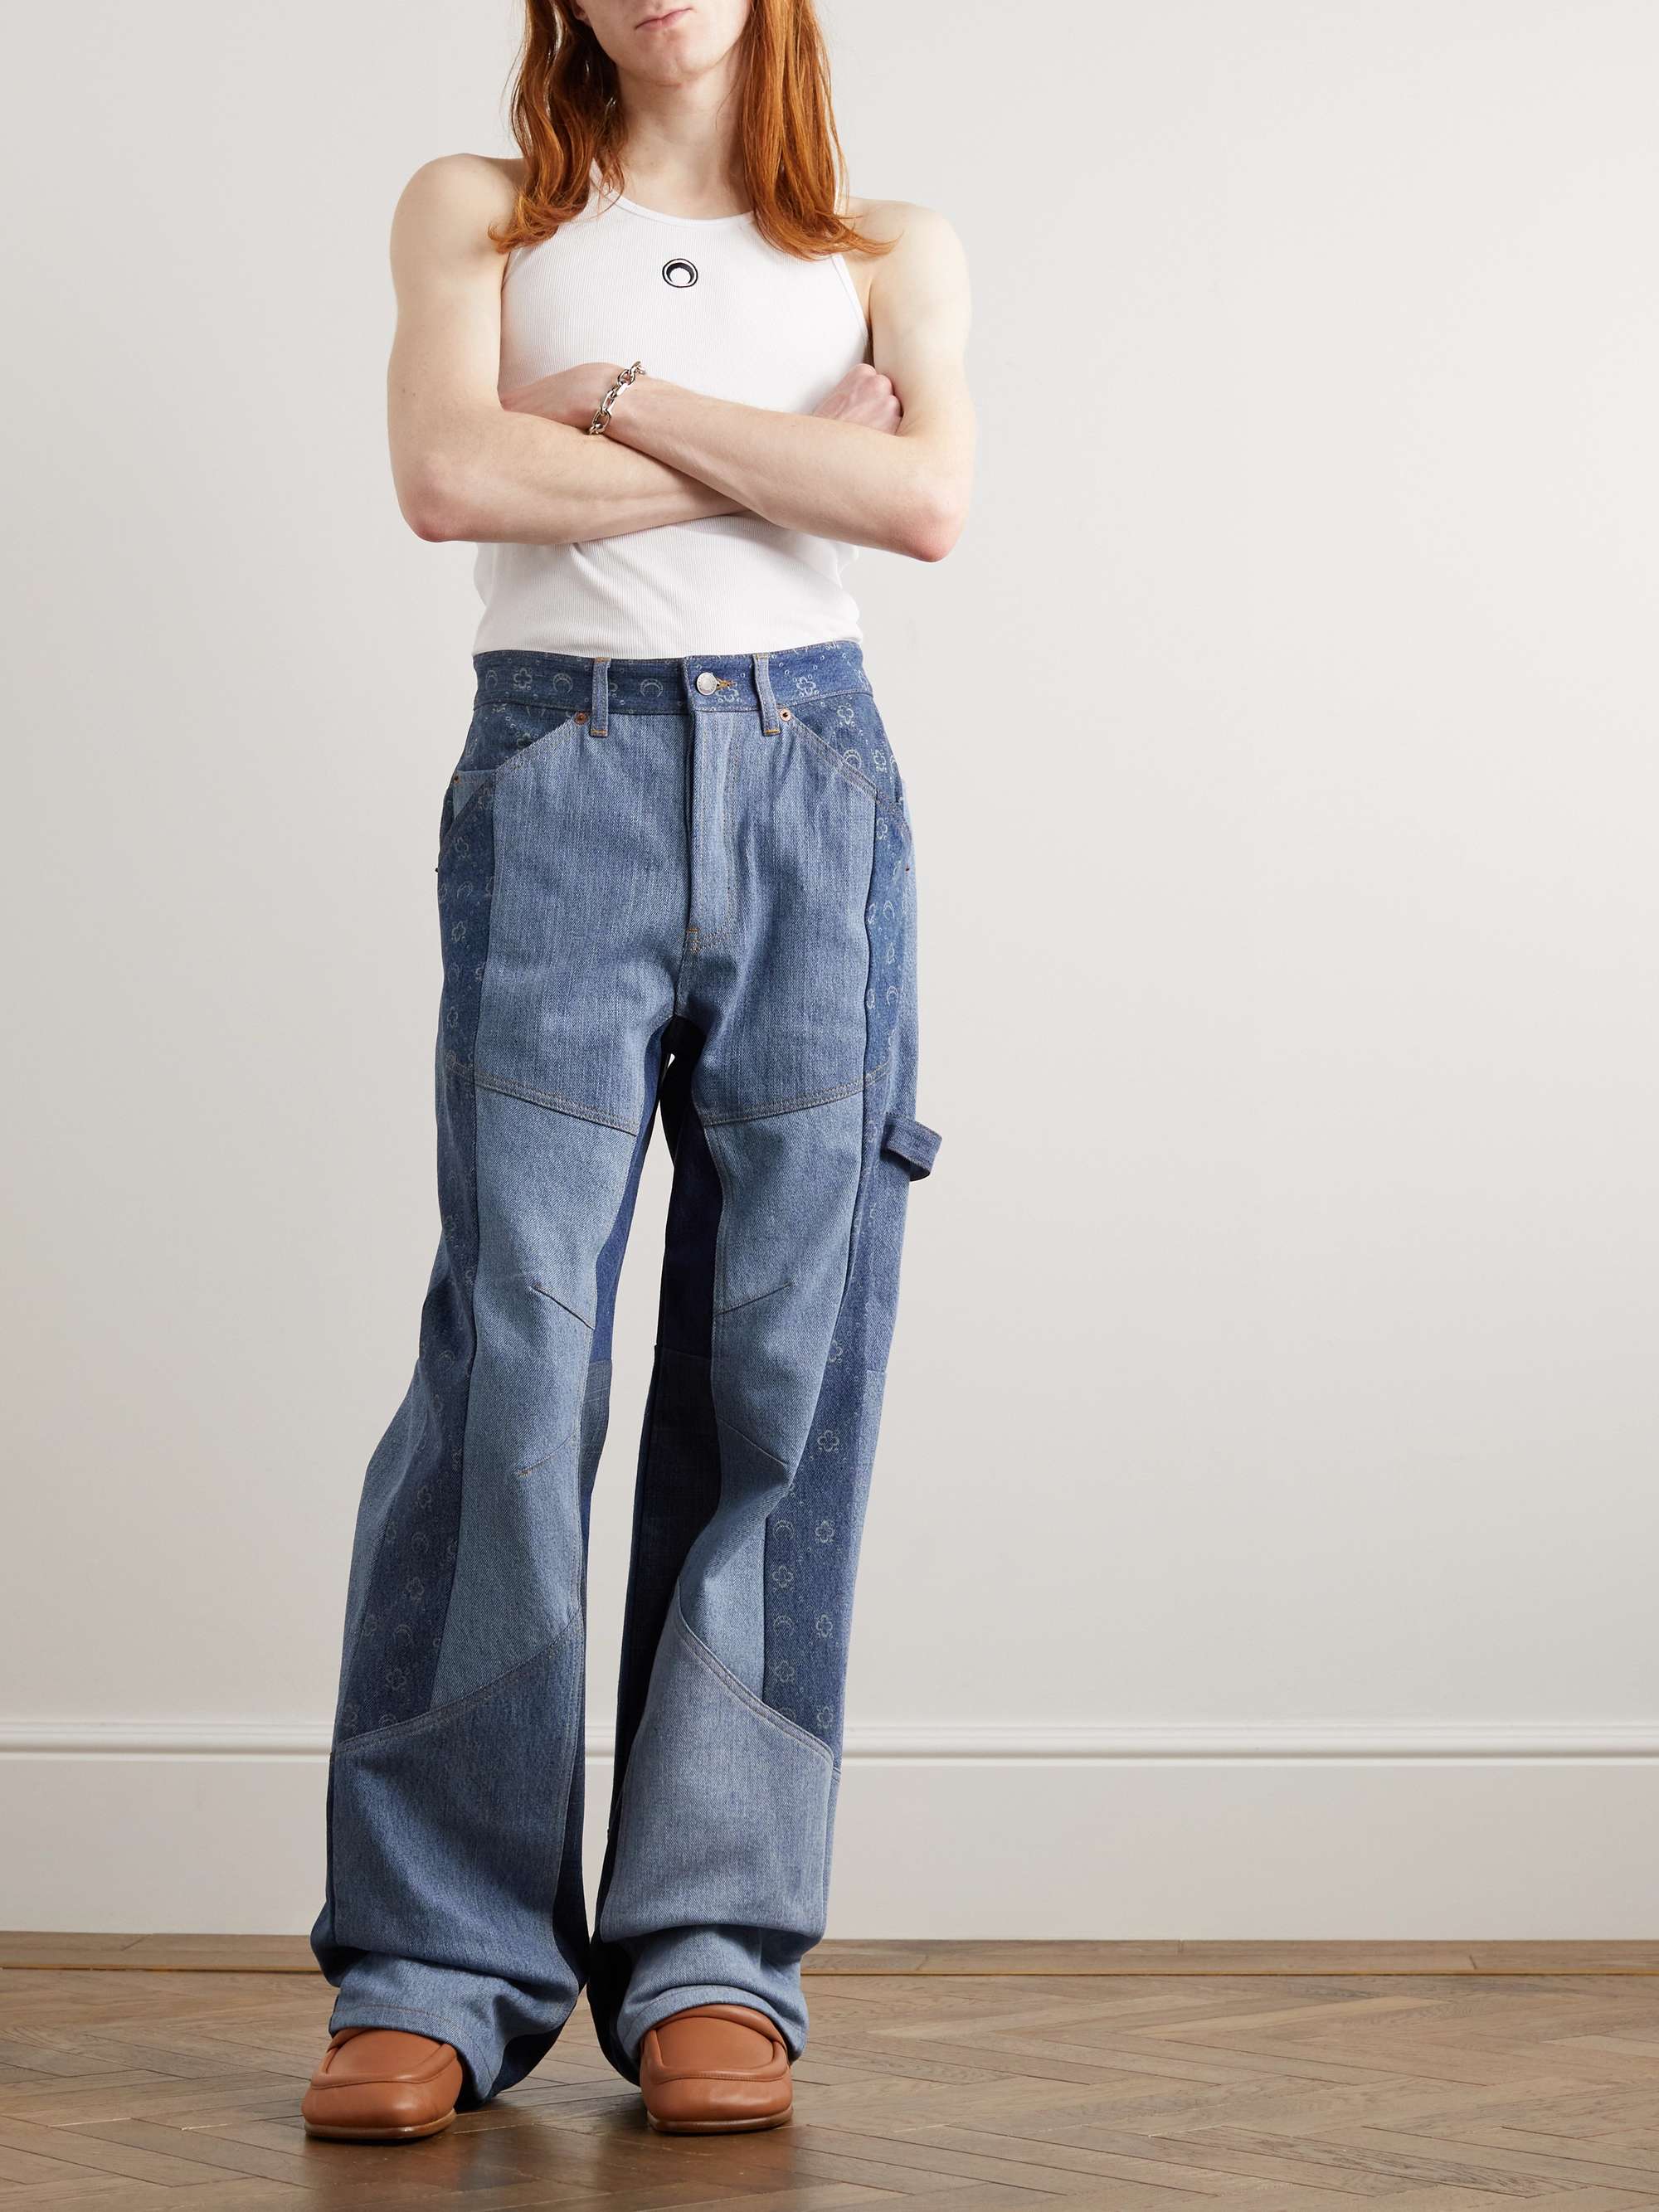 MARINE SERRE Straight-Leg Printed Patchwork Jeans | MR PORTER